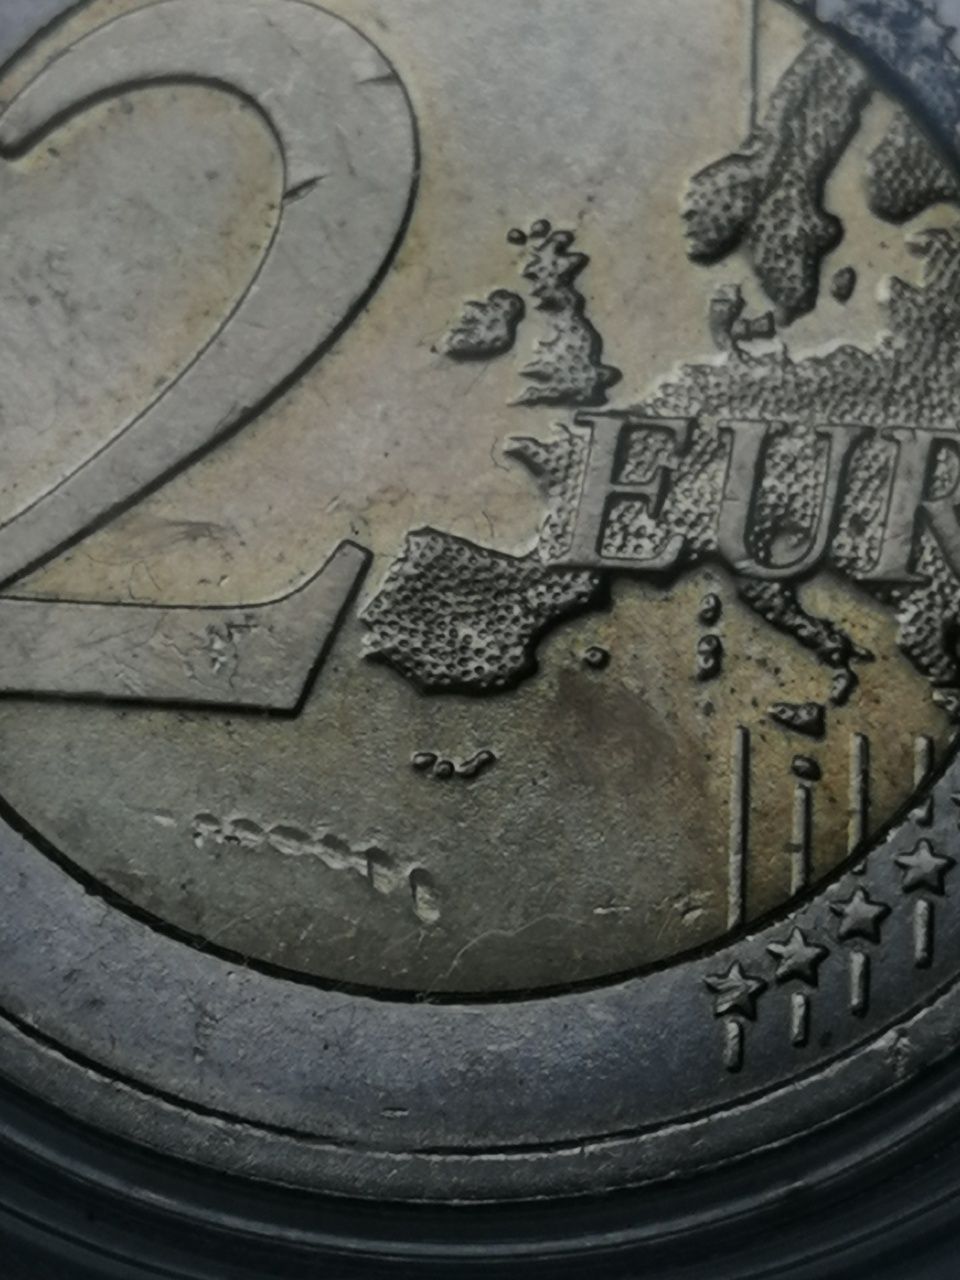 Monedă 2 Euro Austria 2012